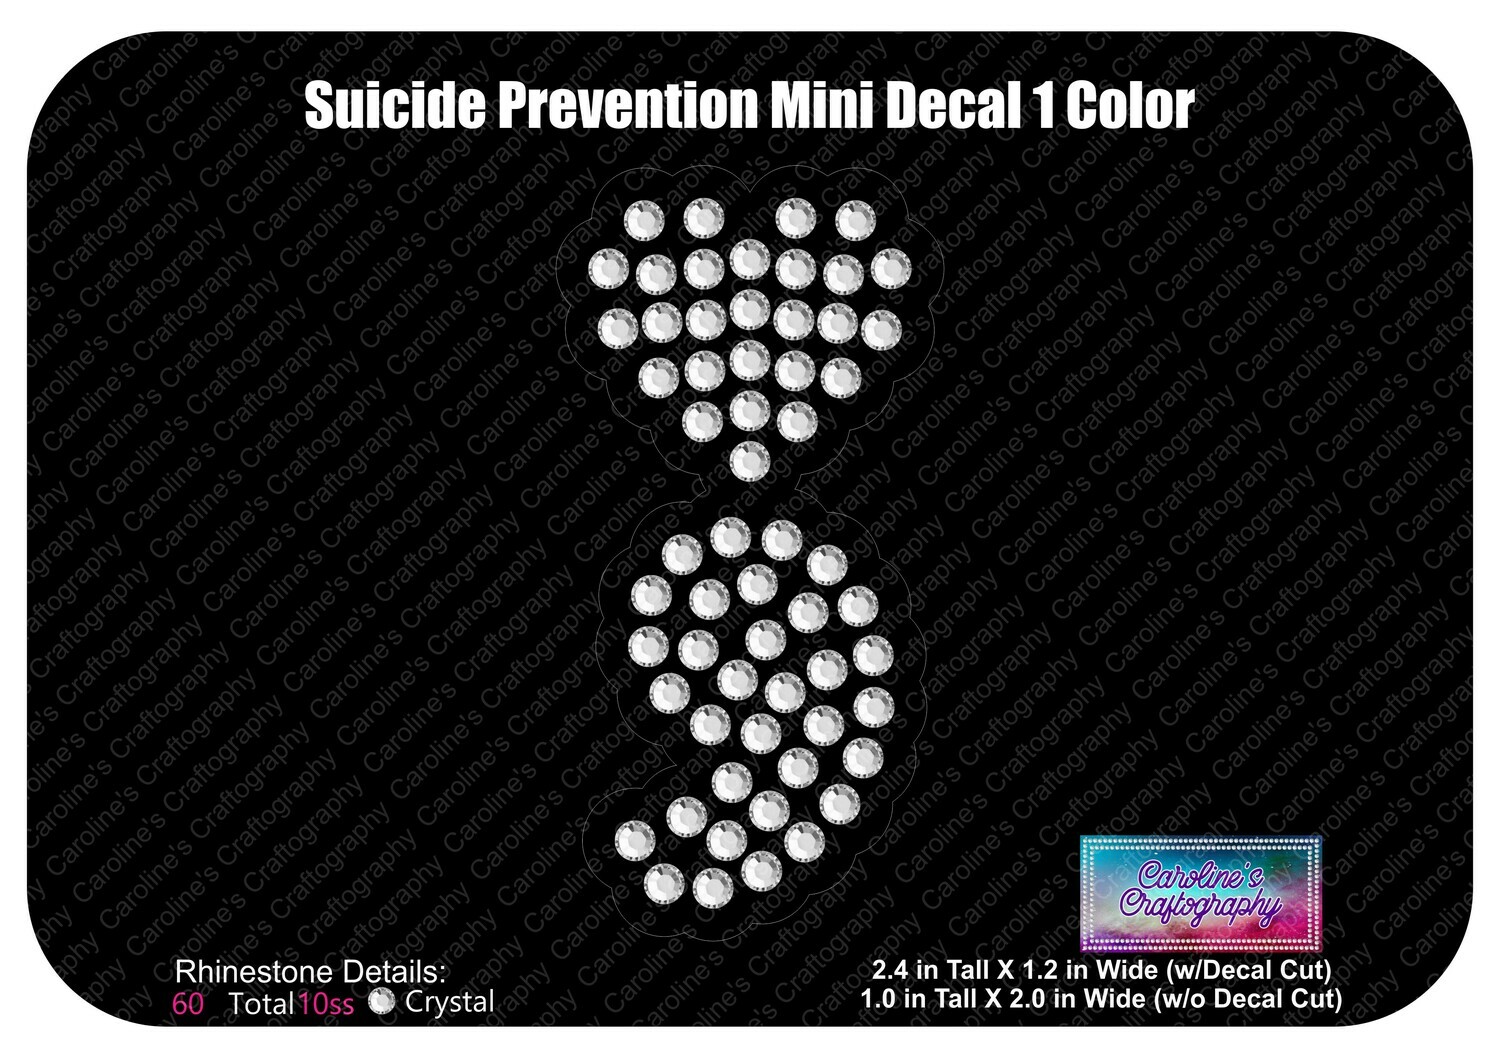 Suicide Prevention Heart Mini Decal (1 Color)